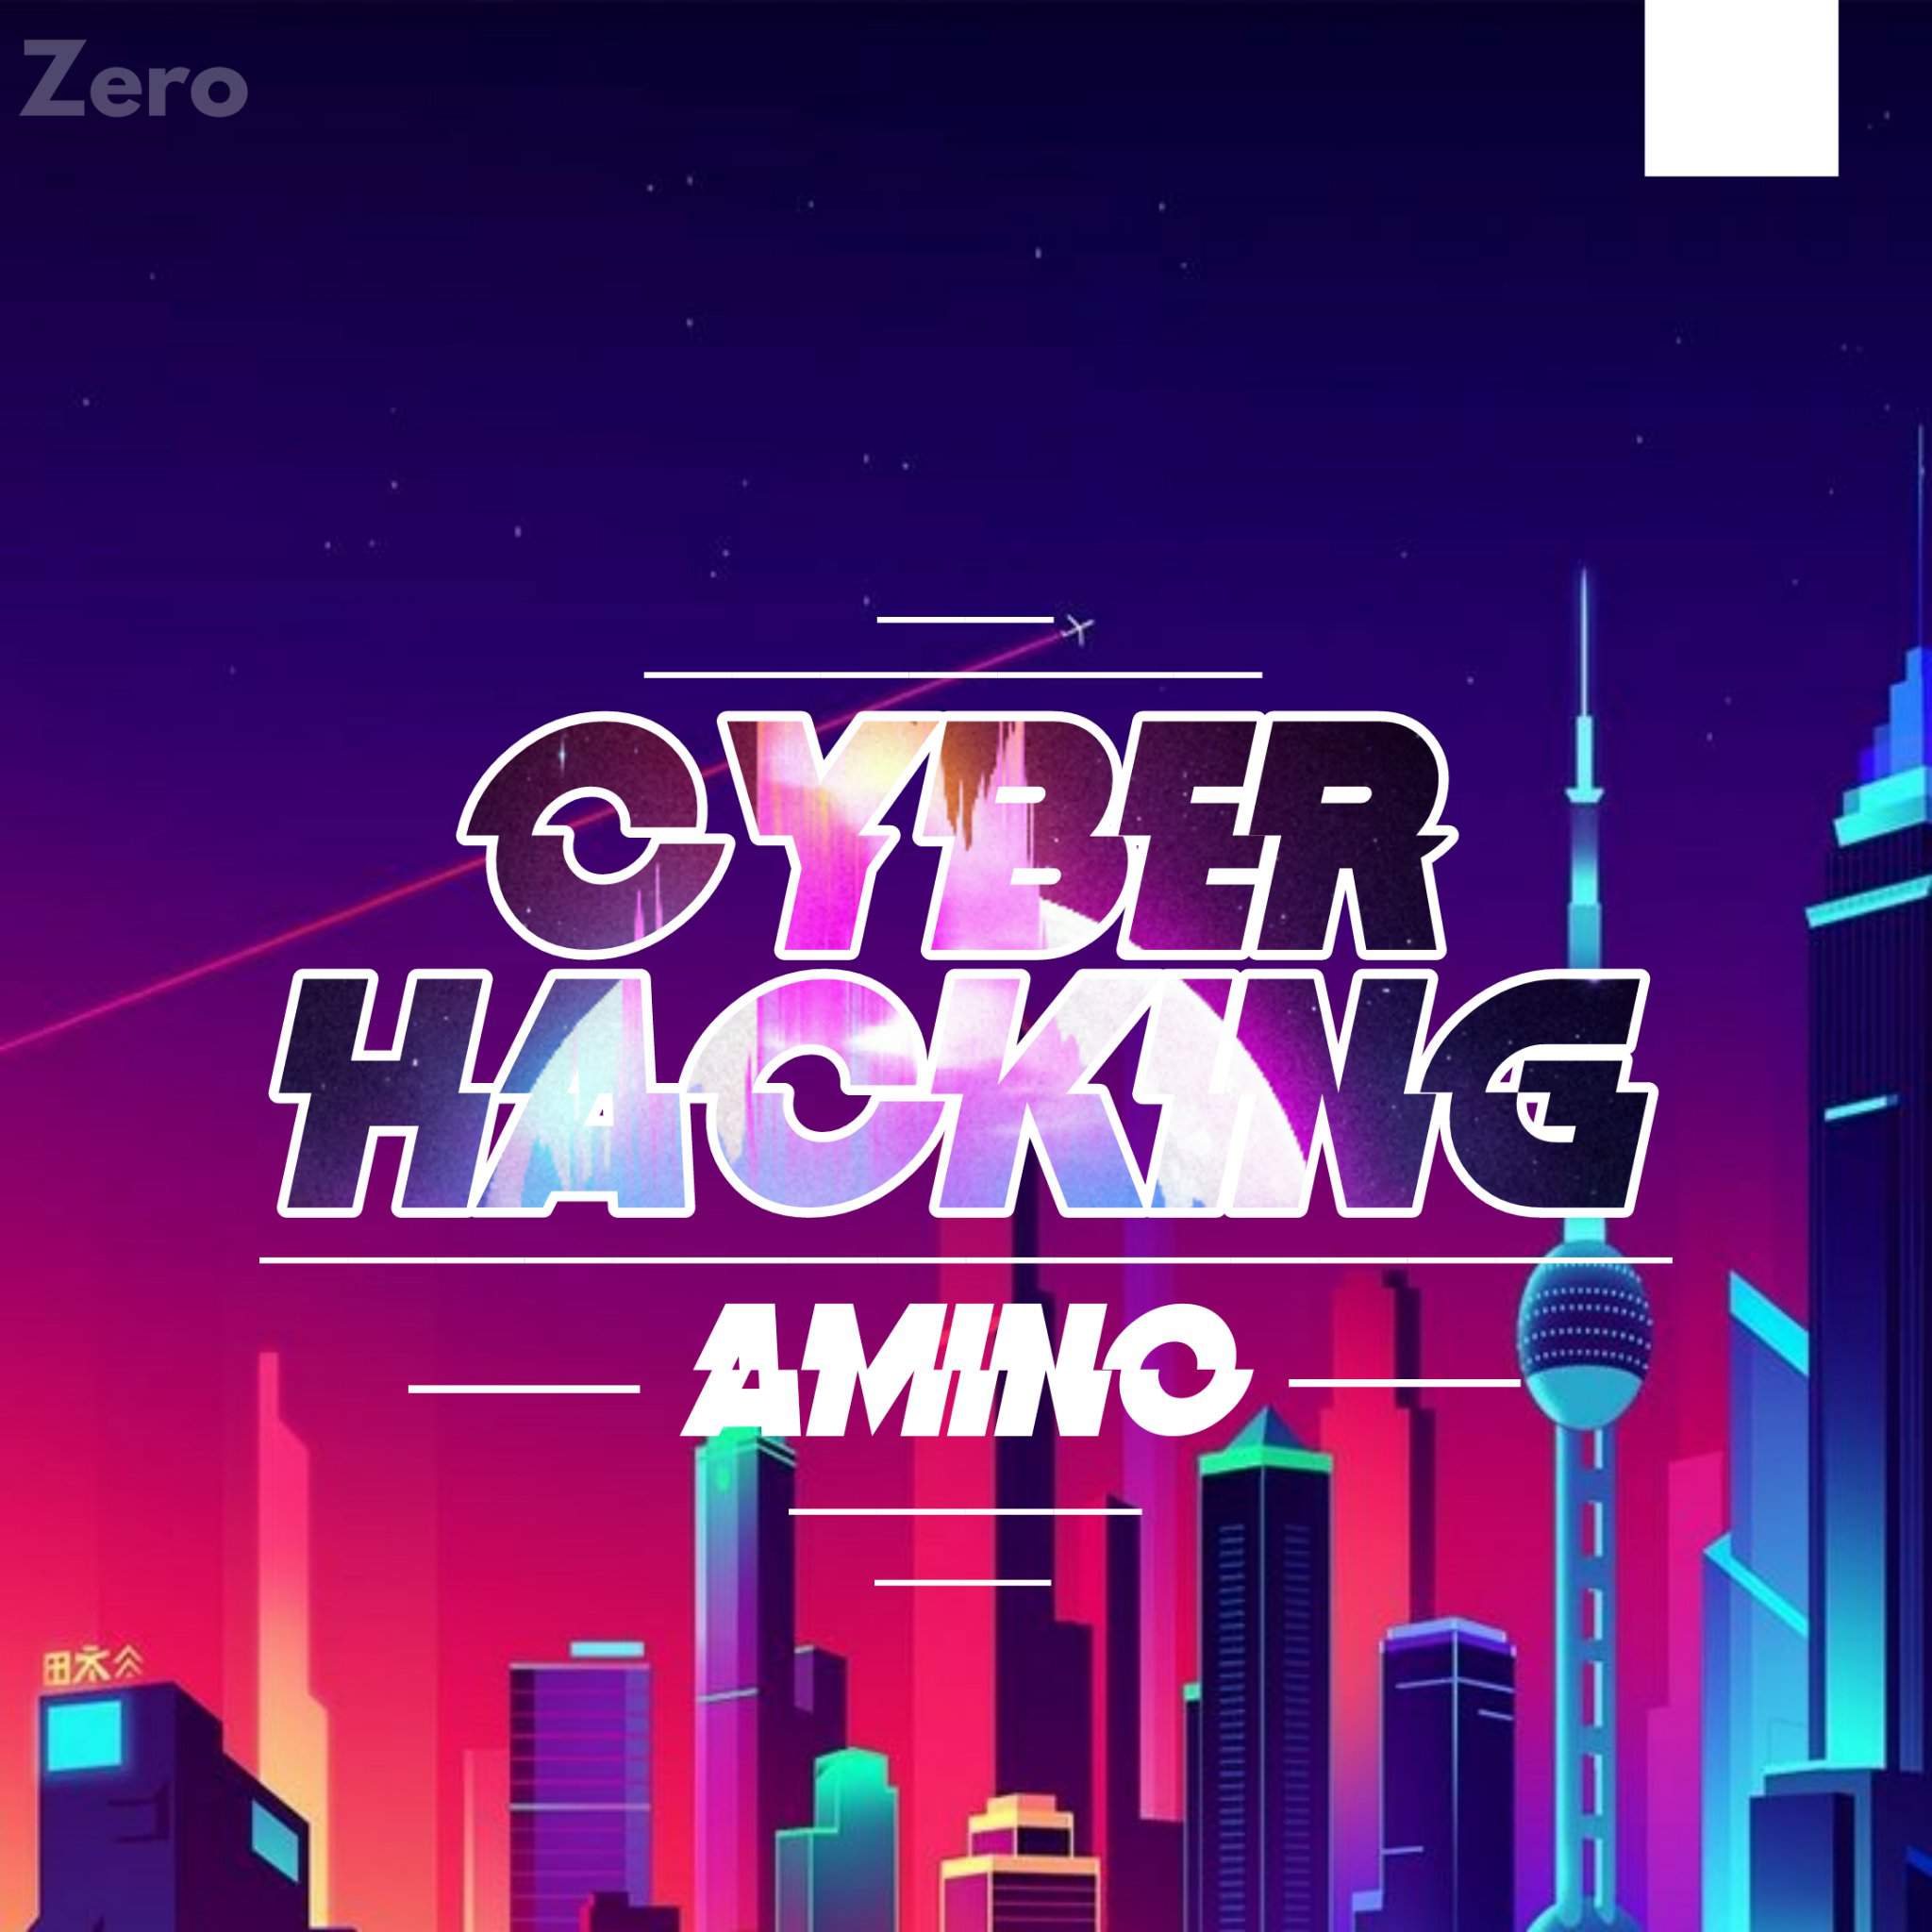 Fantastic Vol 2 Cyber Hacking Amino